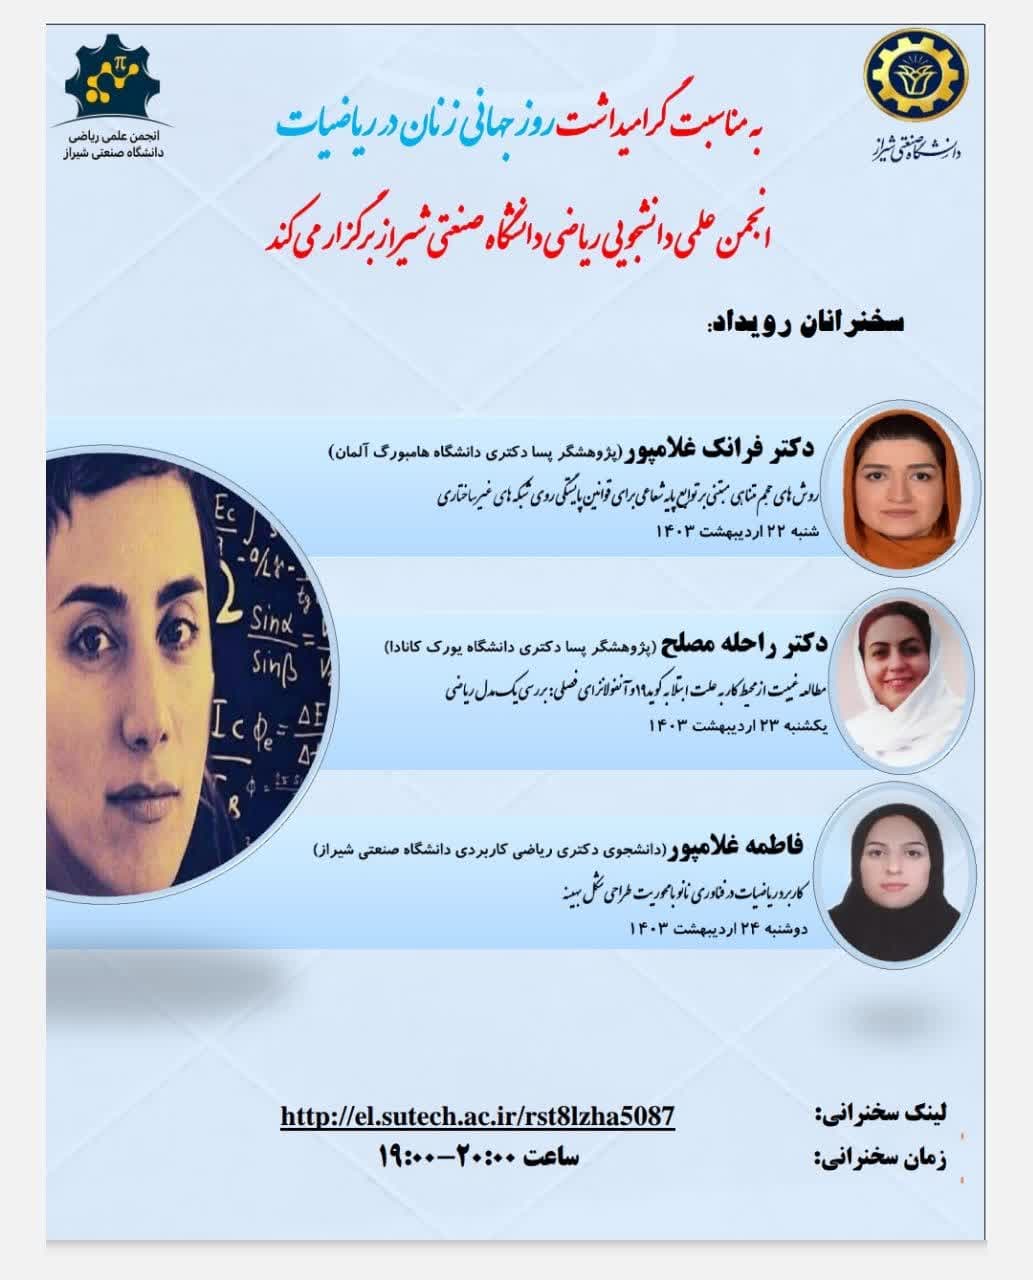 Celebrating Women in Mathematics Day, Shiraz, Iran